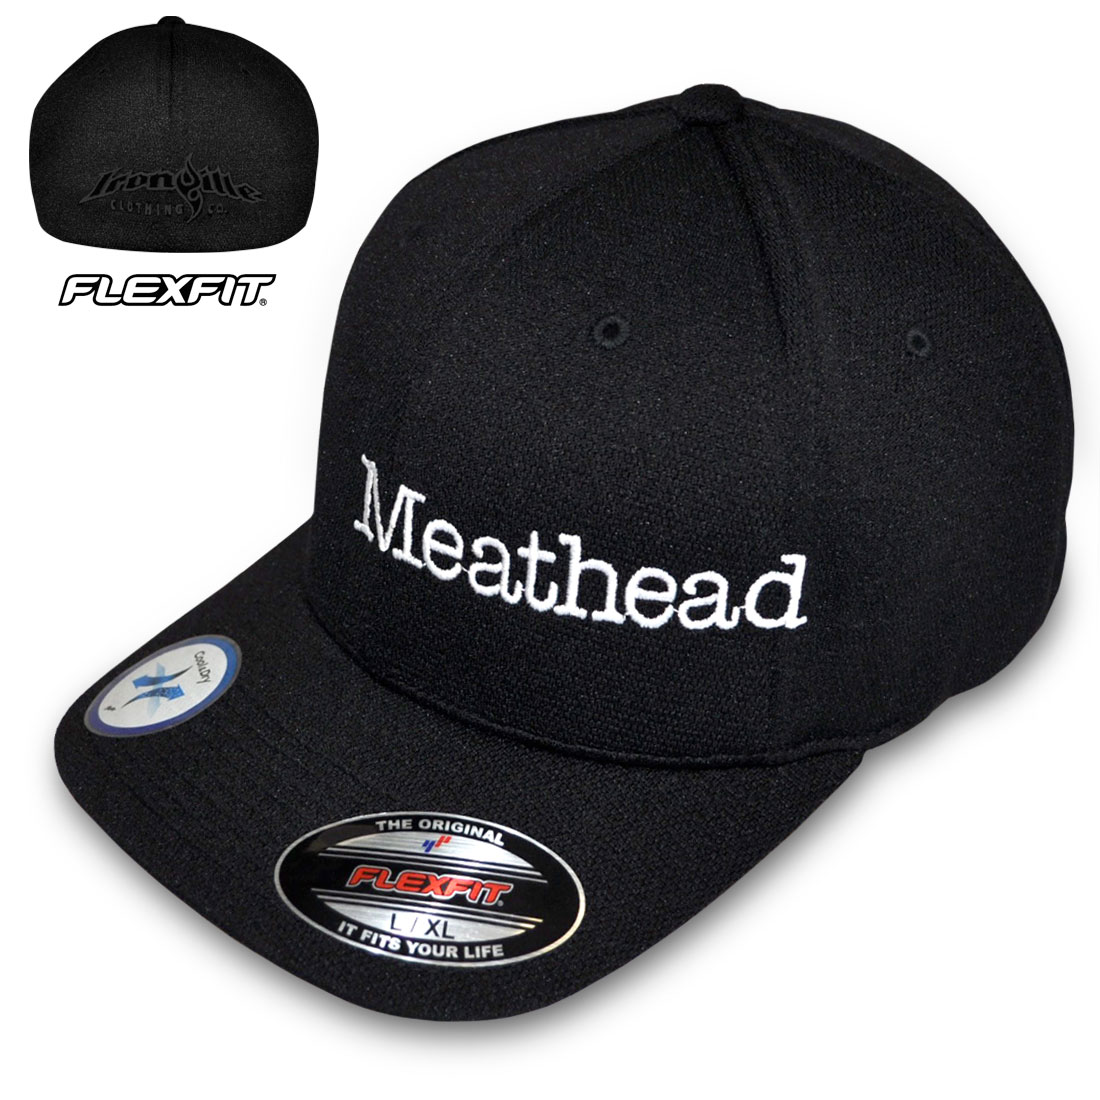 Meathead Hat Flexfit Cool Dry Bodybuilder Powerlifter Weightlifter Black With White